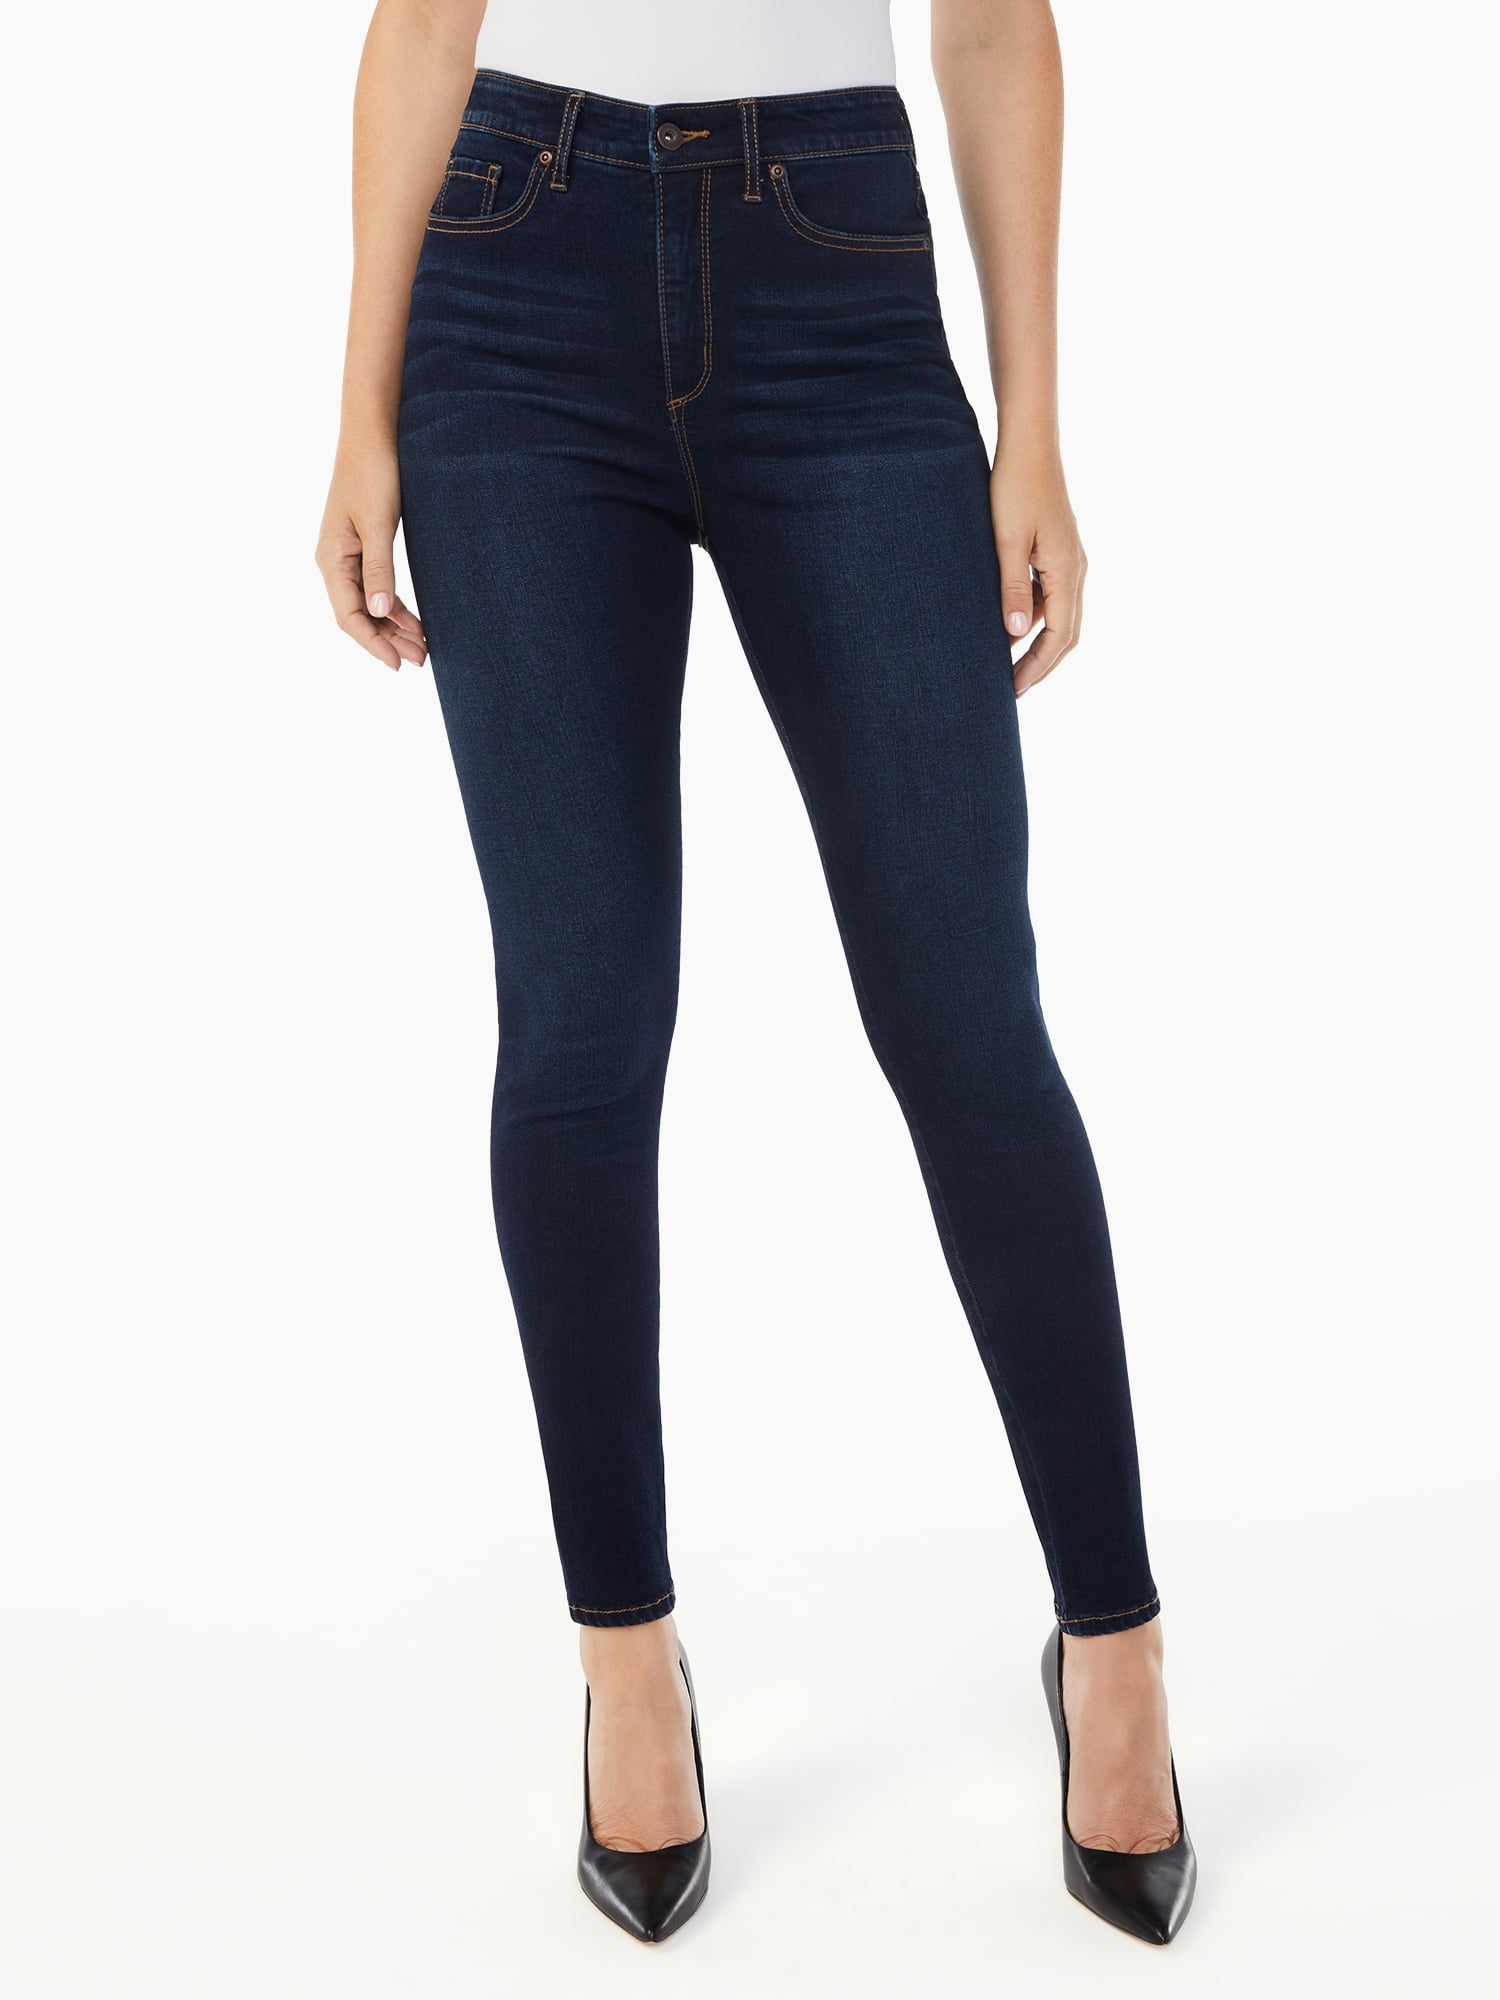 Sofia Jeans Women's Rosa Curvy Skinny Super High Rise